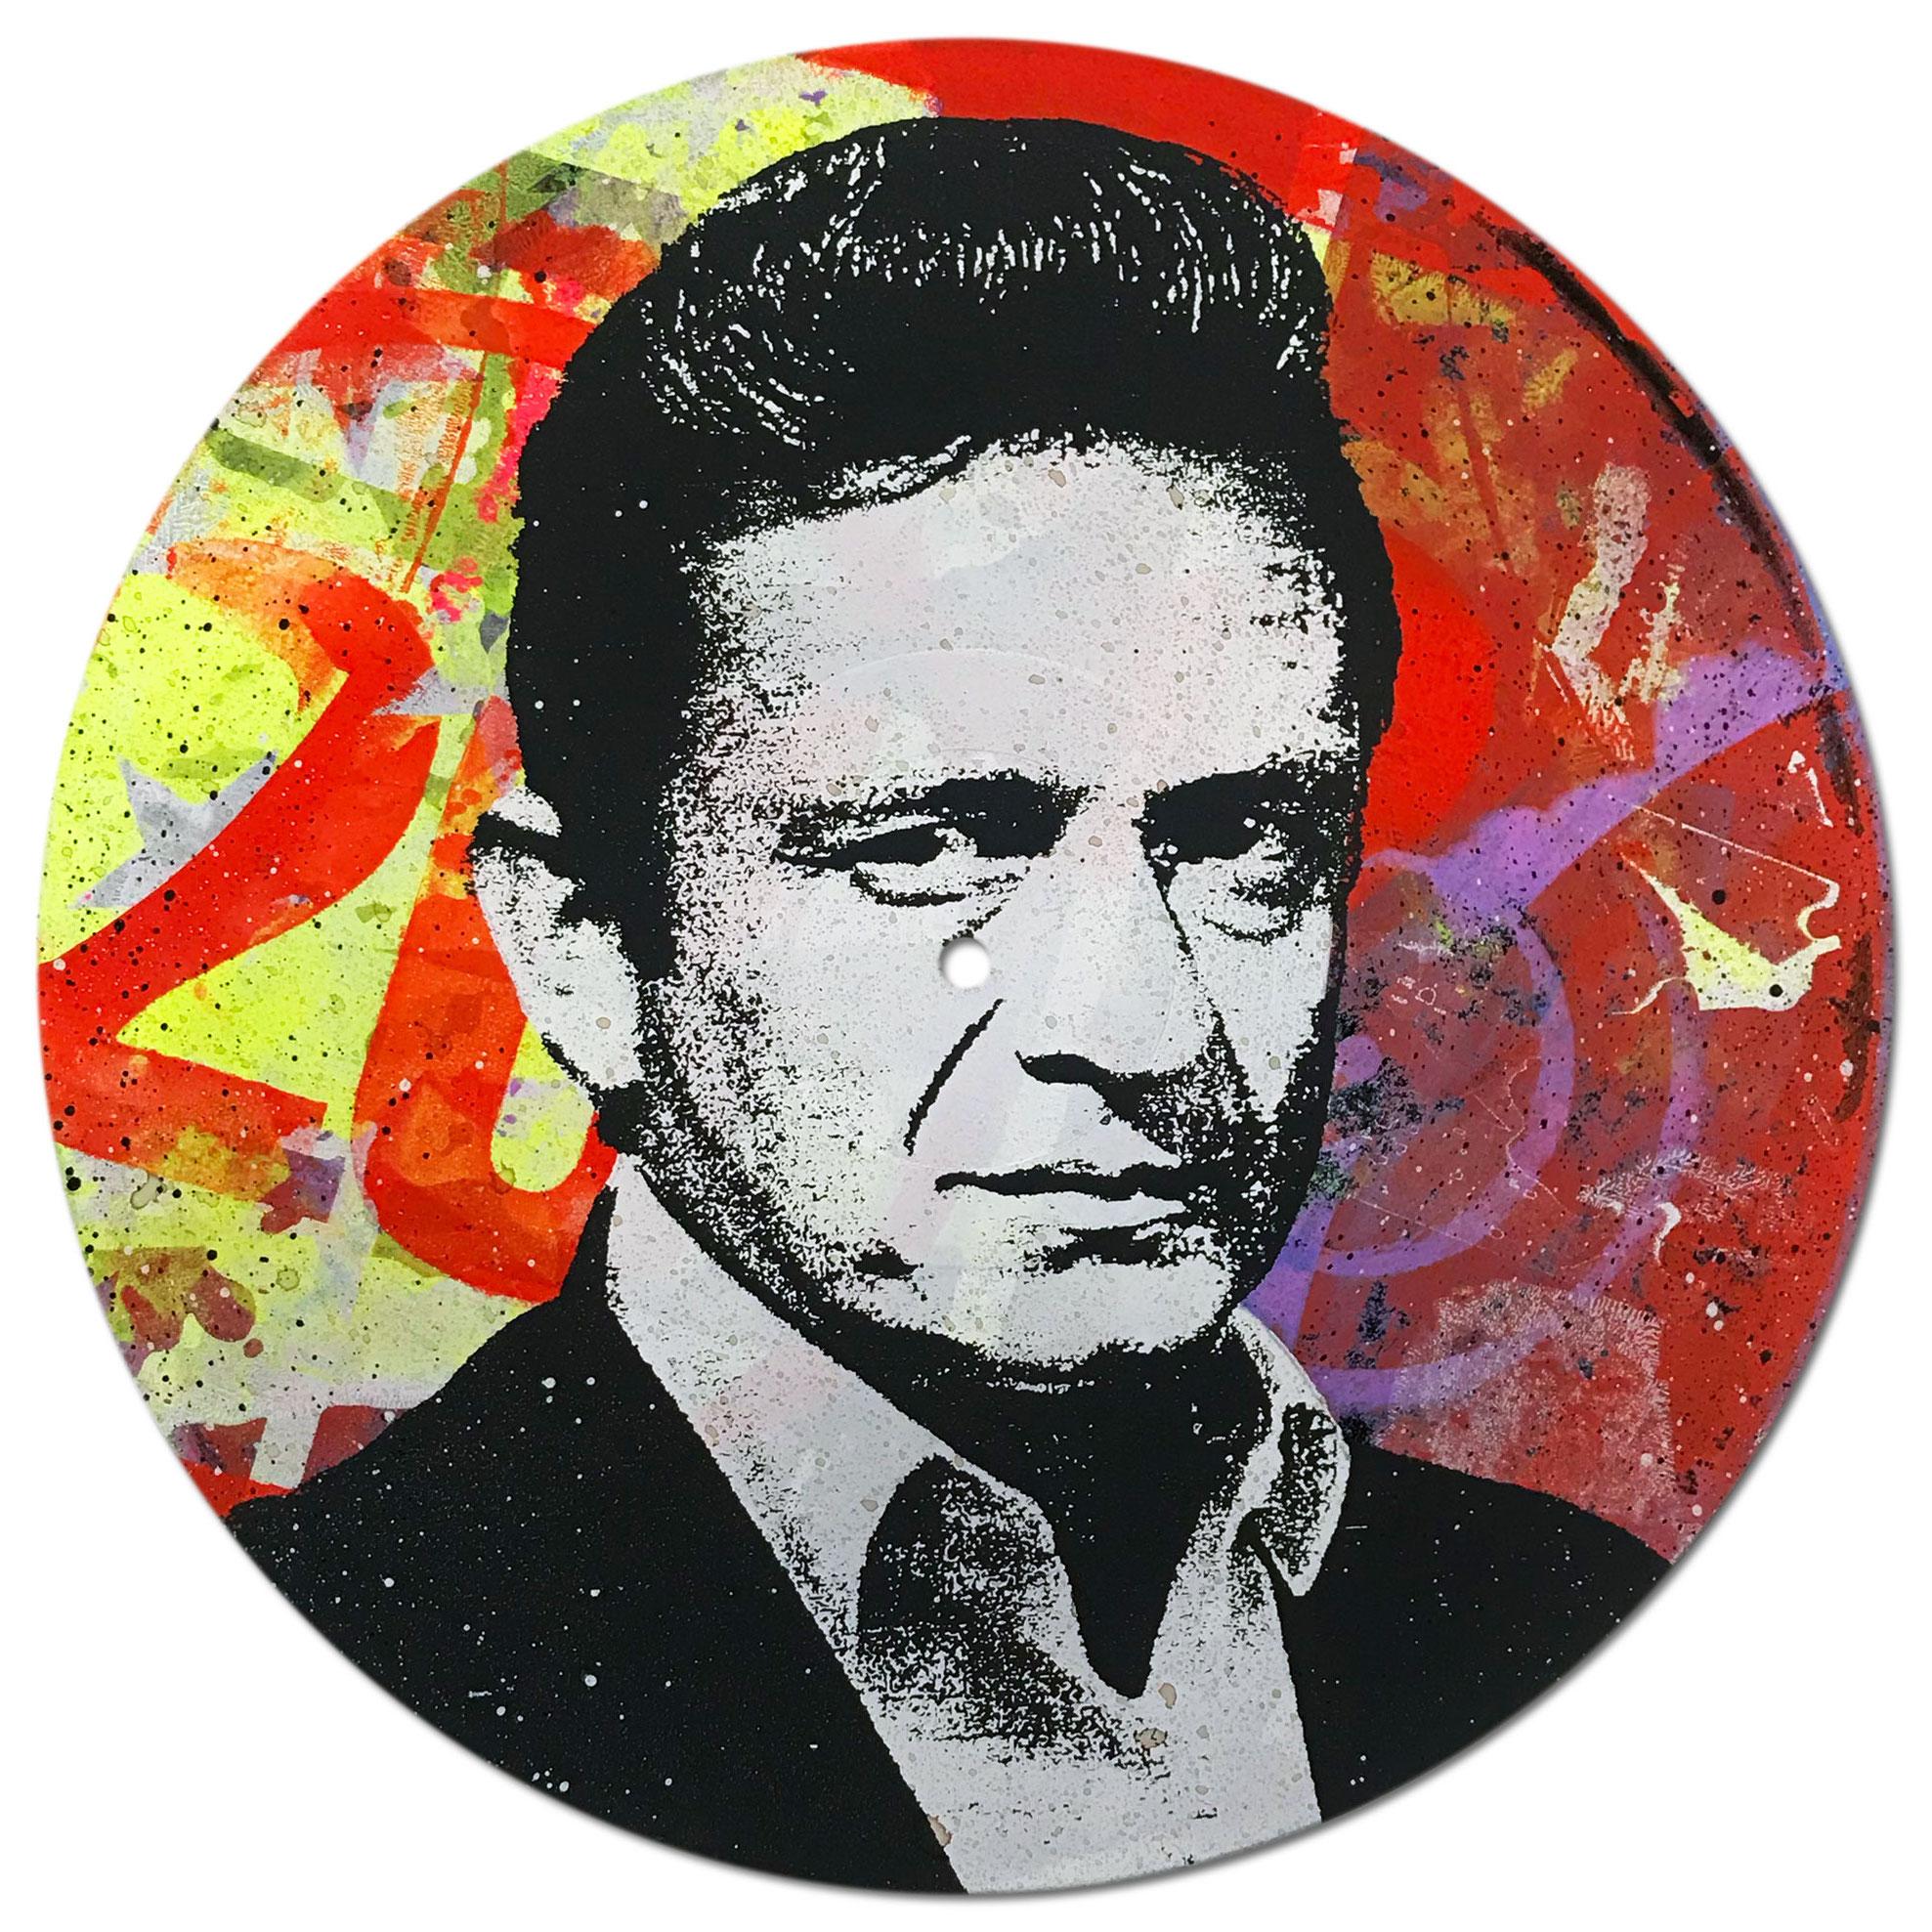 Johnny Cash Vinyl 1-10, Greg Gossel Pop Art LP Record (Singles & Sets Available) For Sale 4